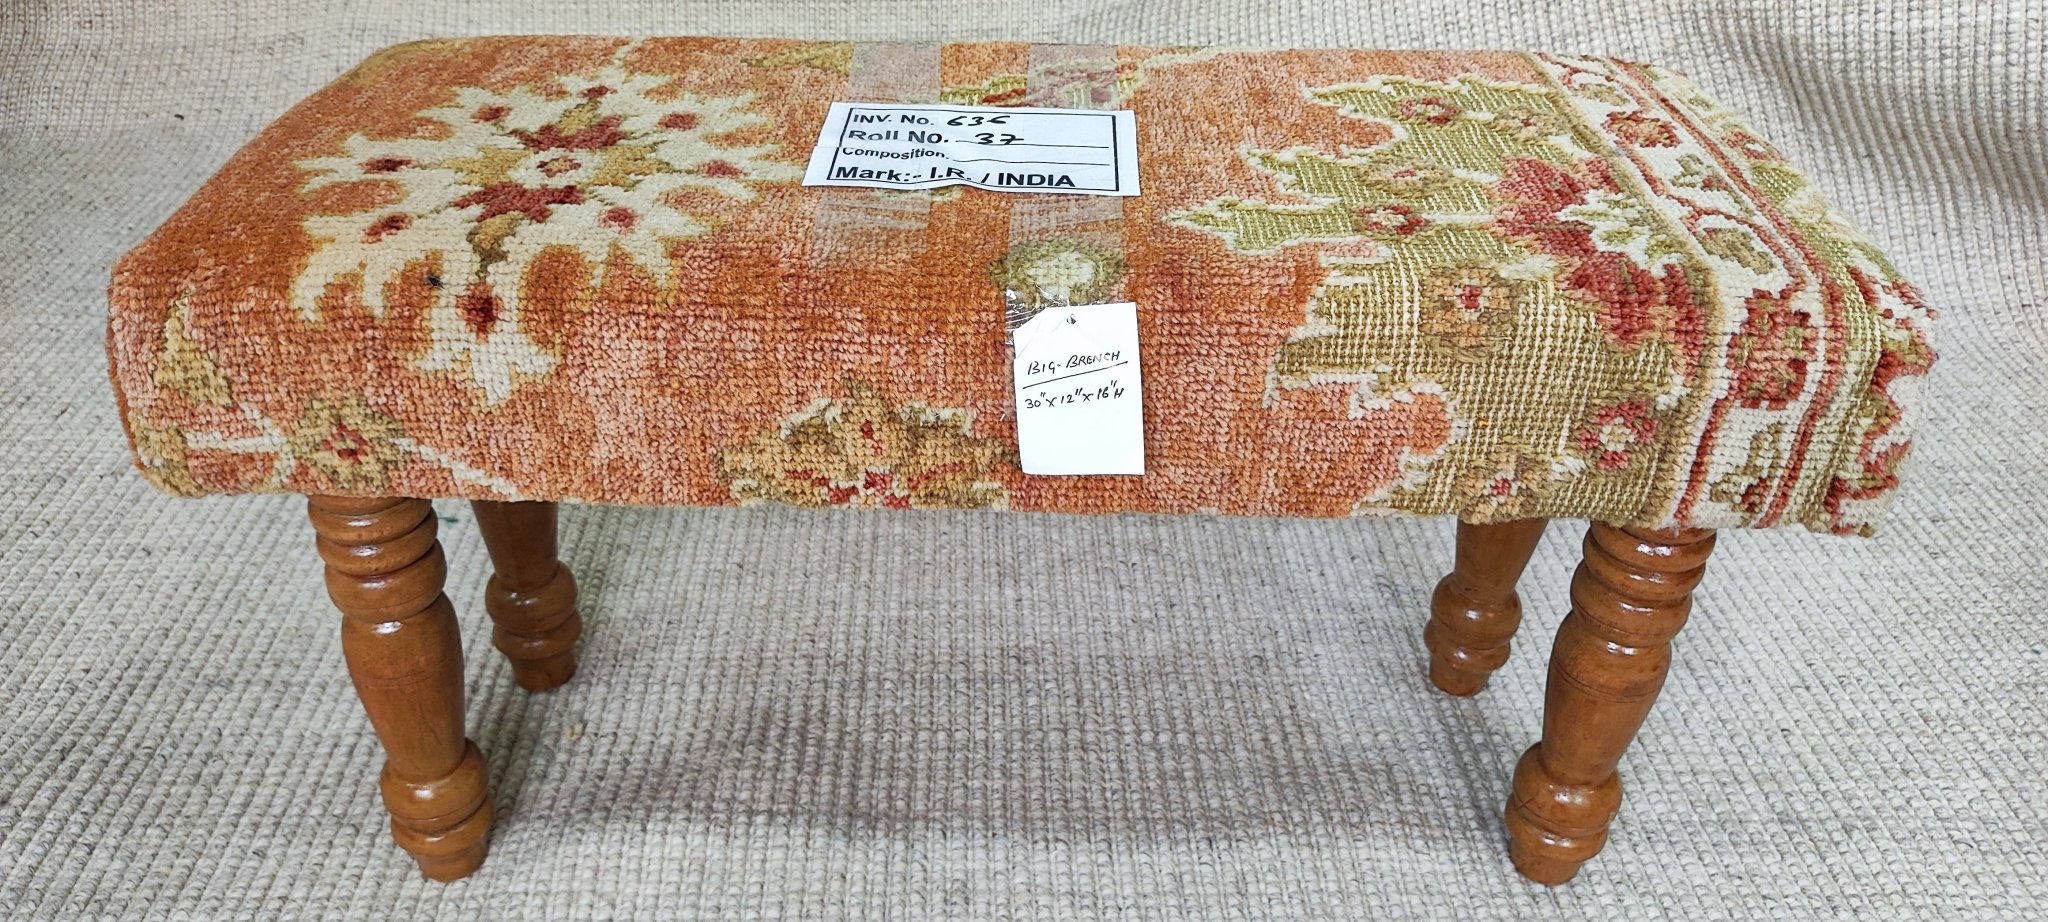 Bette Davis 30x12x16 Wooden Upholstered Bench | Banana Manor Rug Factory Outlet